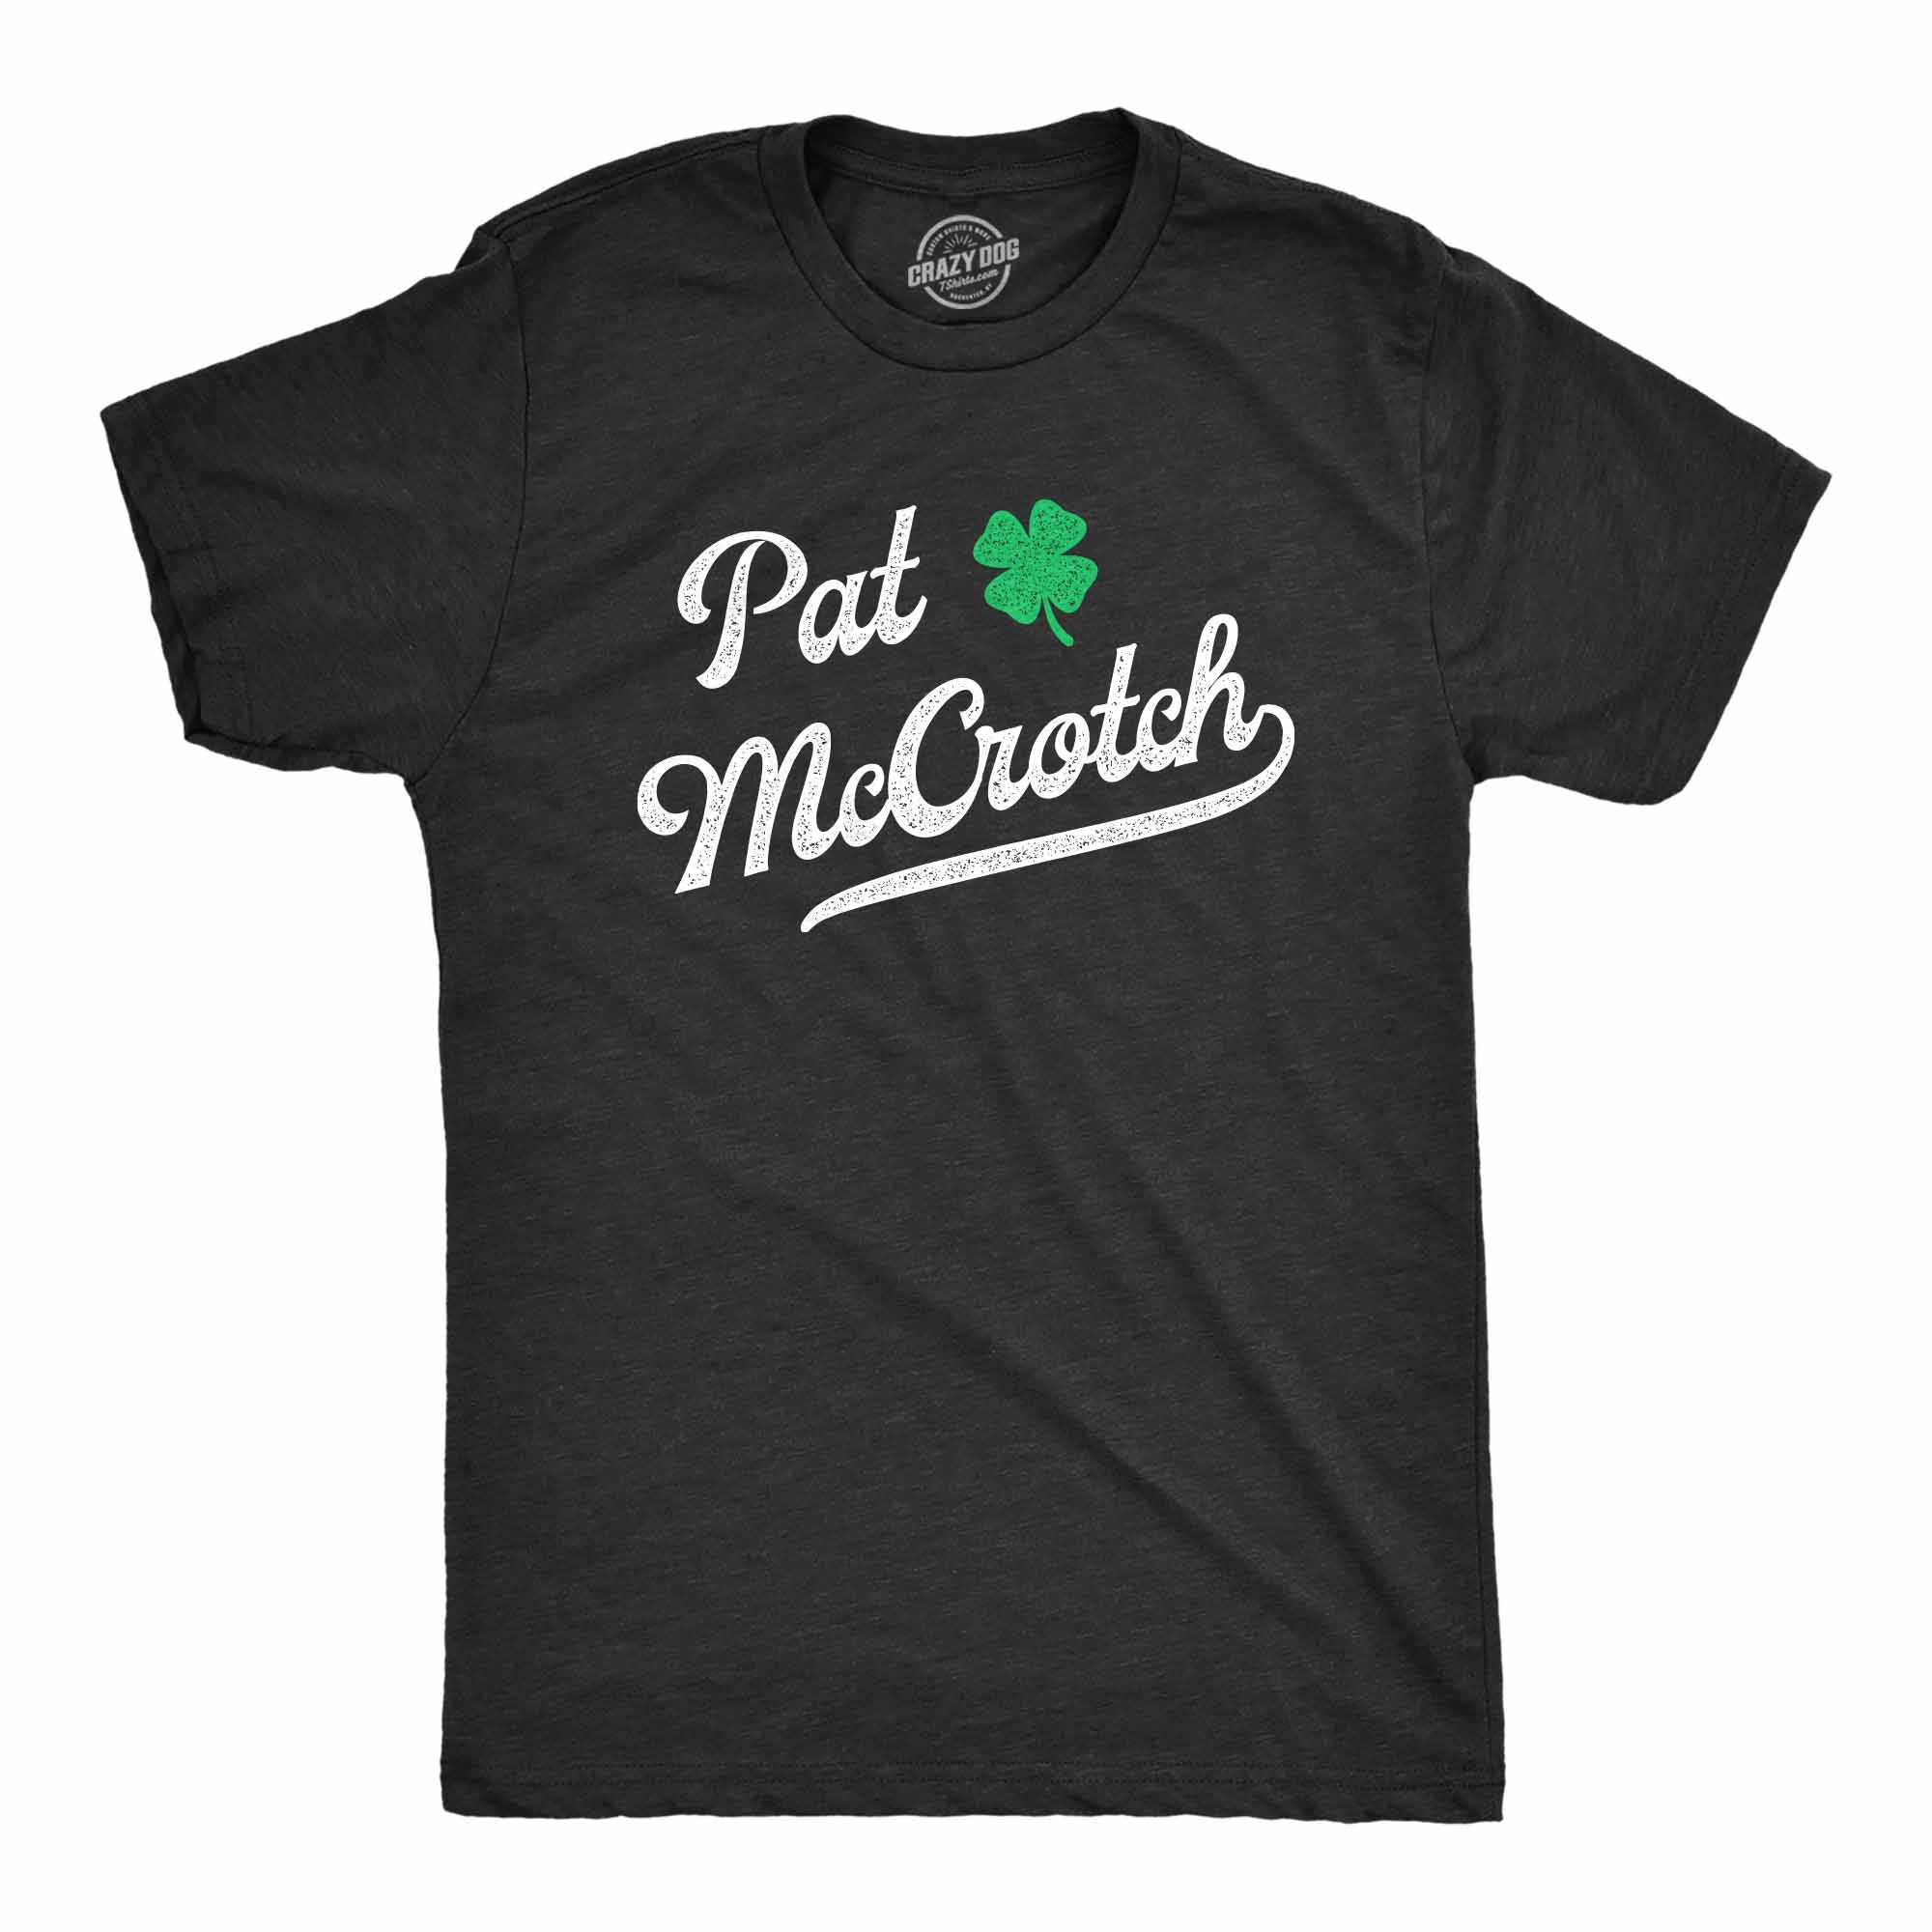 Funny Heather Black - Pat McCrotch Pat McCrotch Mens T Shirt Nerdy Saint Patrick's Day Sarcastic Sex Tee